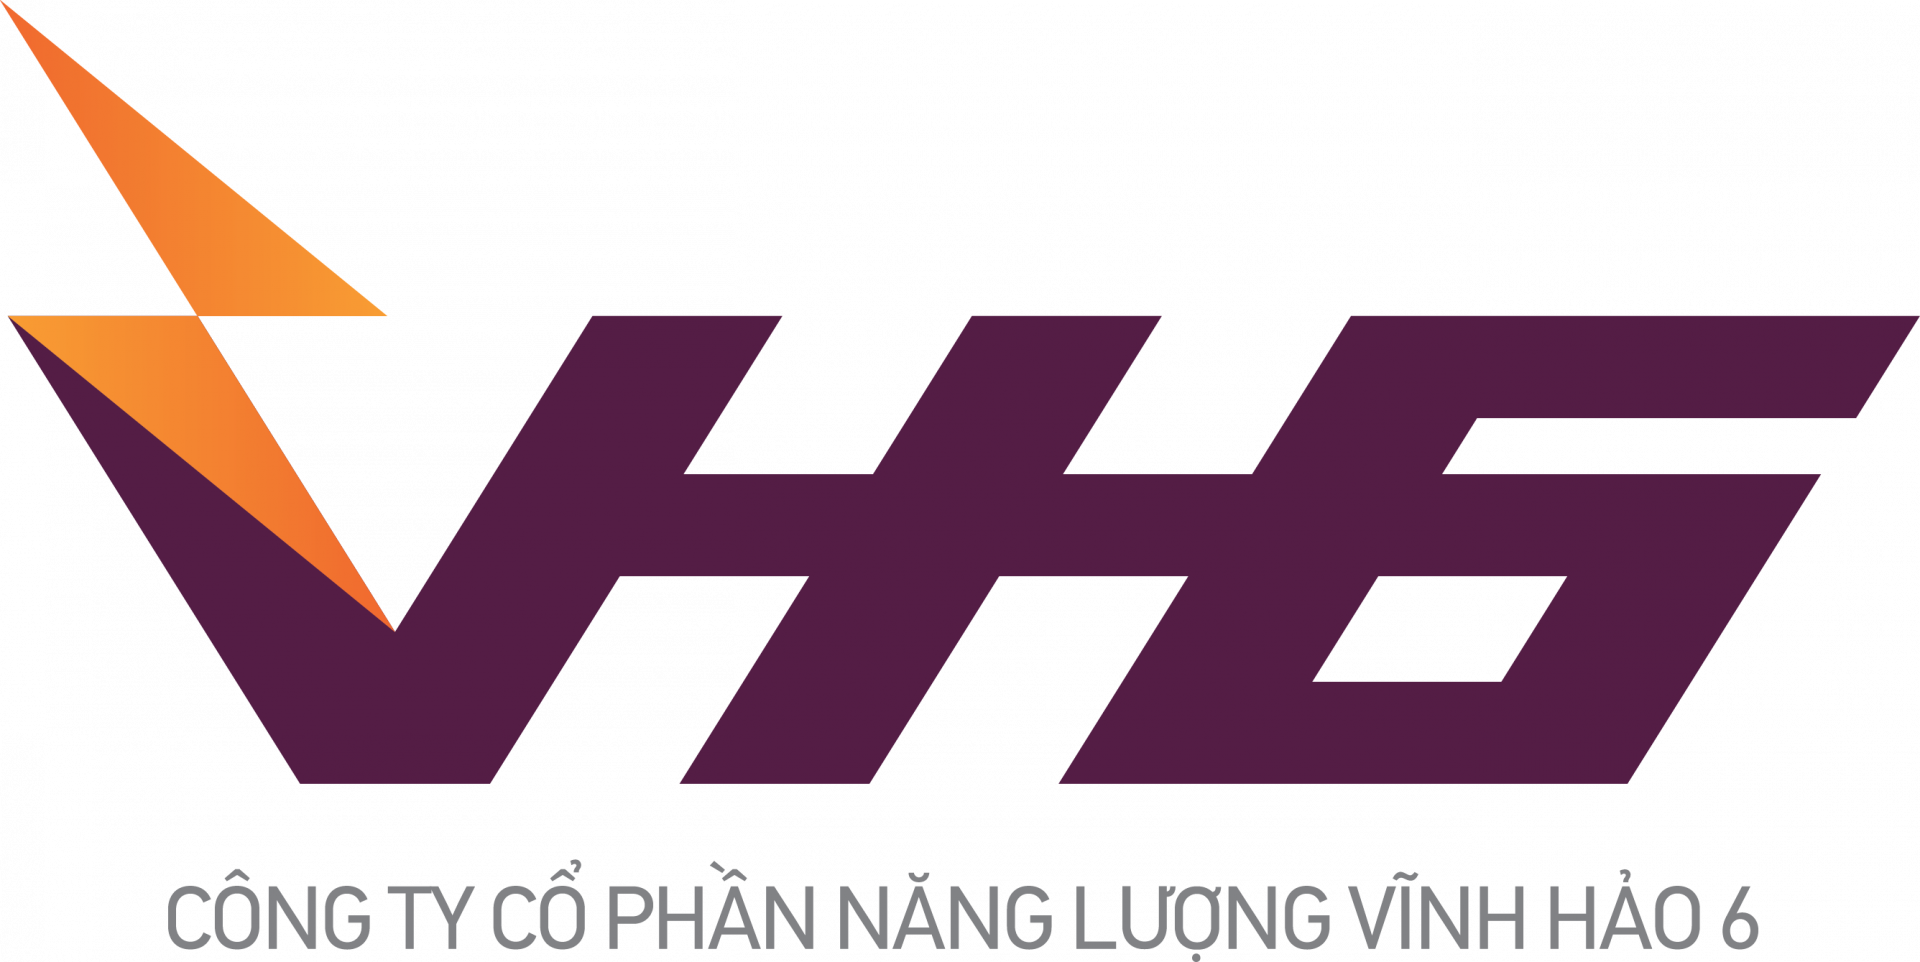 VINH HAO 6 POWER JSC